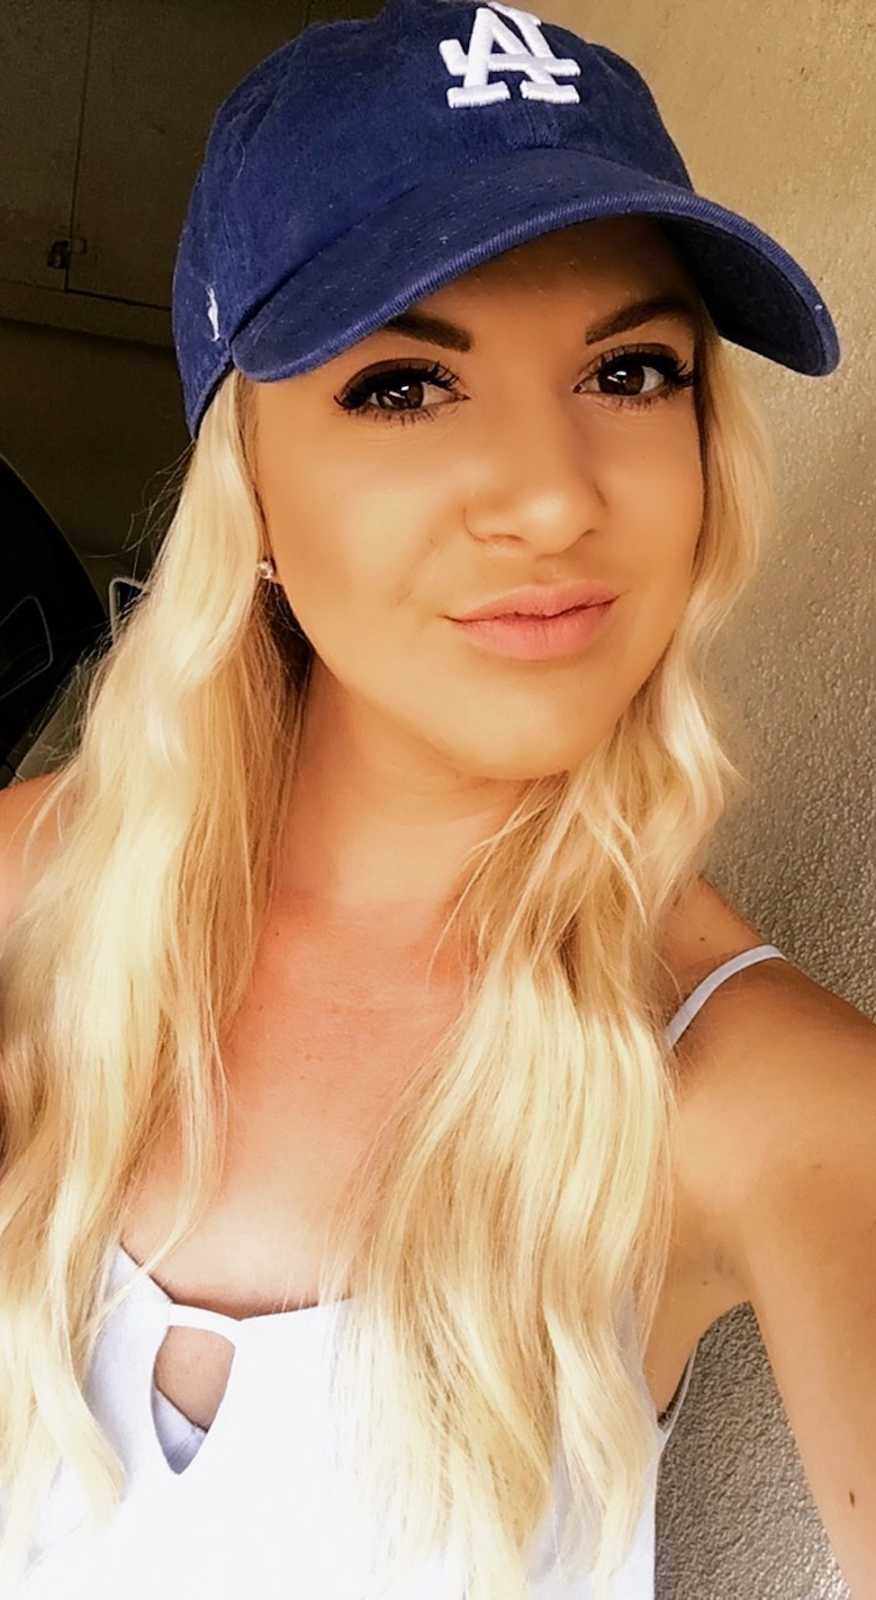 Young woman smiles in selfie as she wears LA Dodger's hat